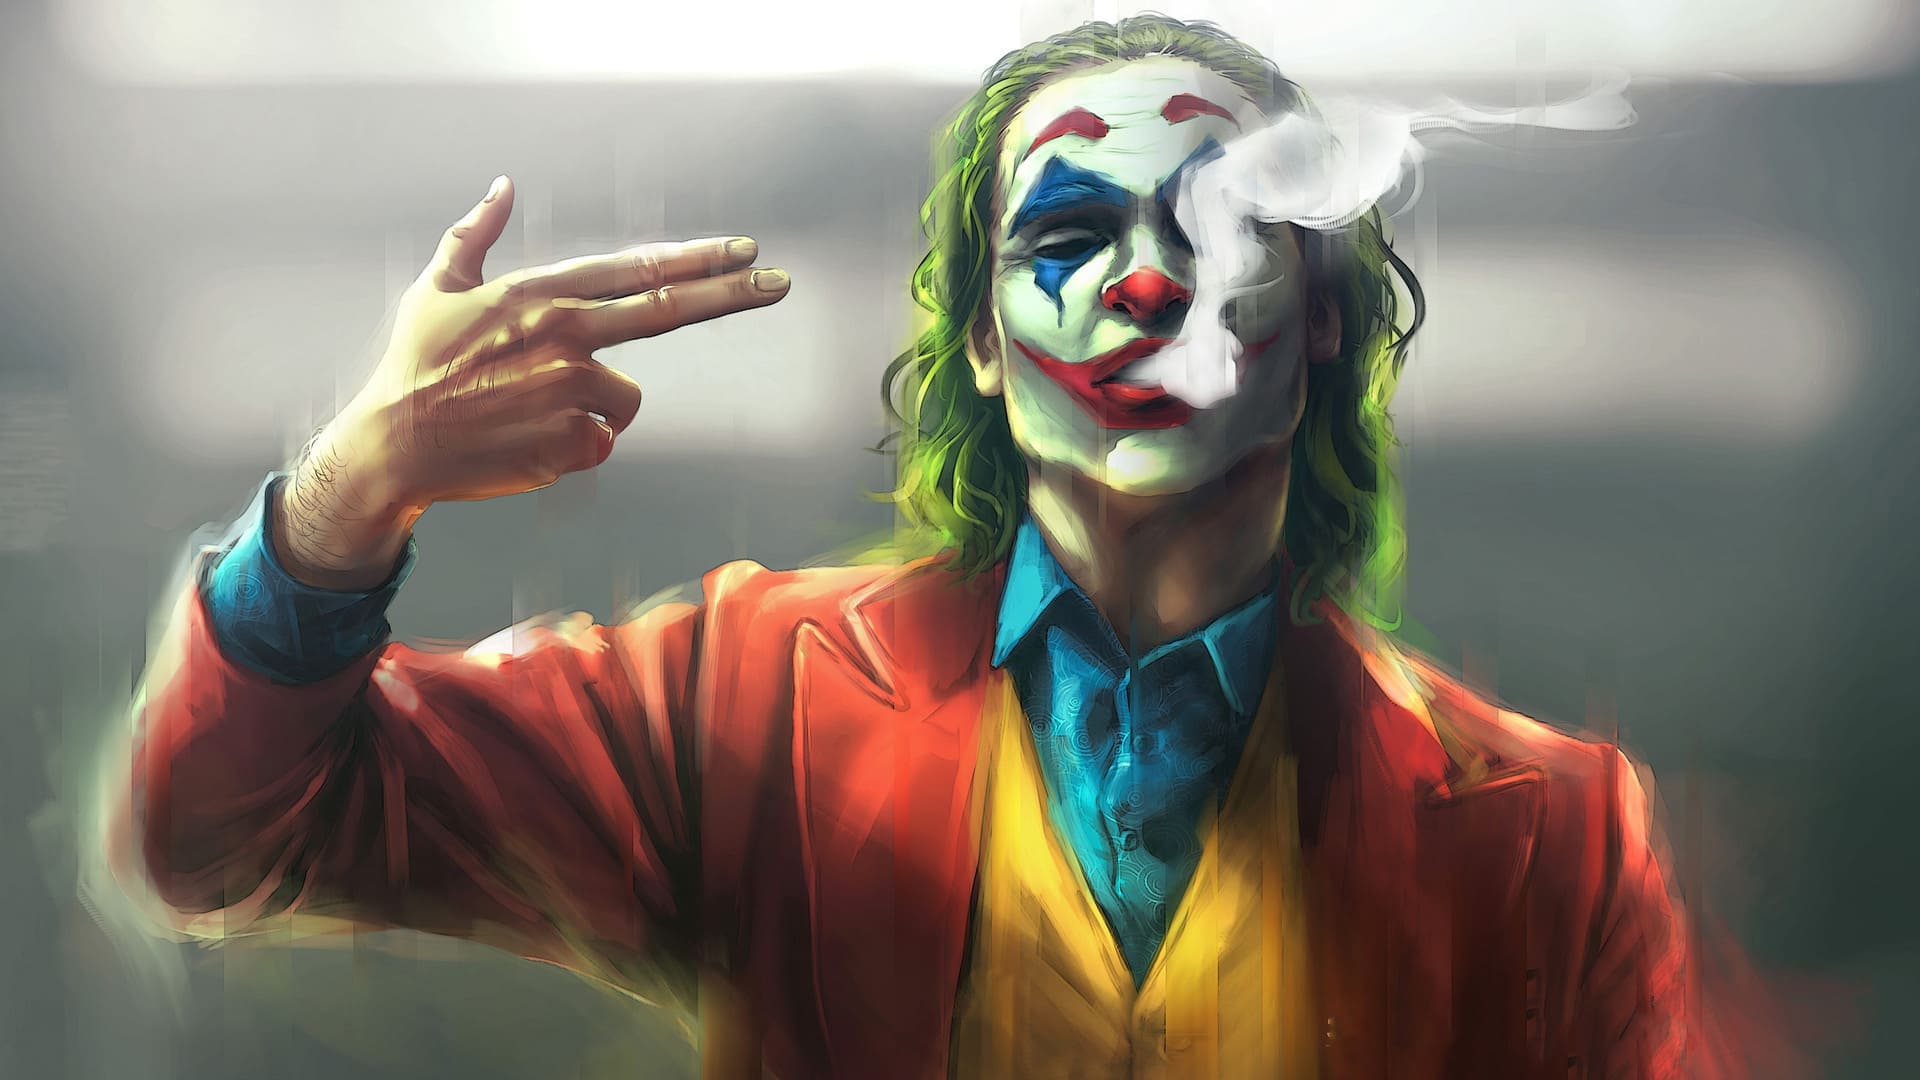 Joker Smoking Wallpapers - Top 35 Joker Cigarette Smoking Backgrounds